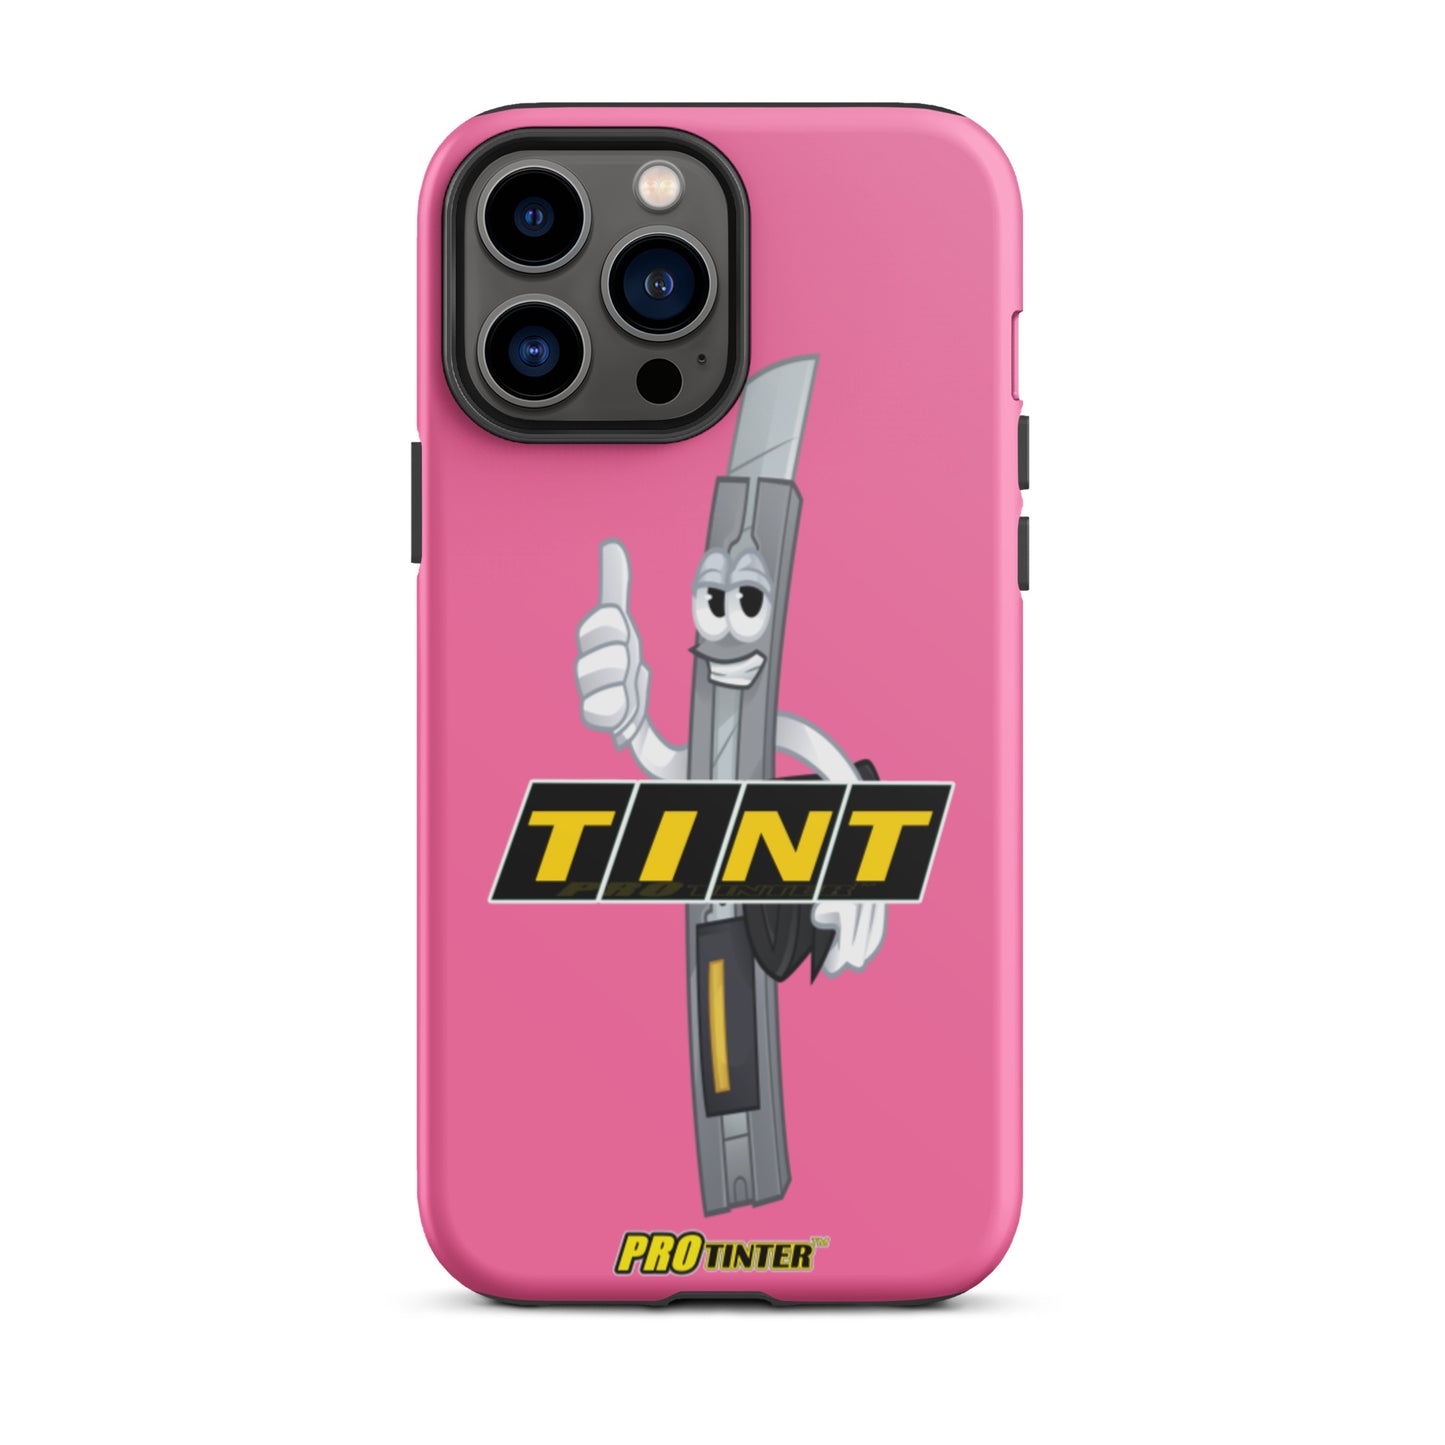 Pink TINT by PRO Tinter Tough iPhone case